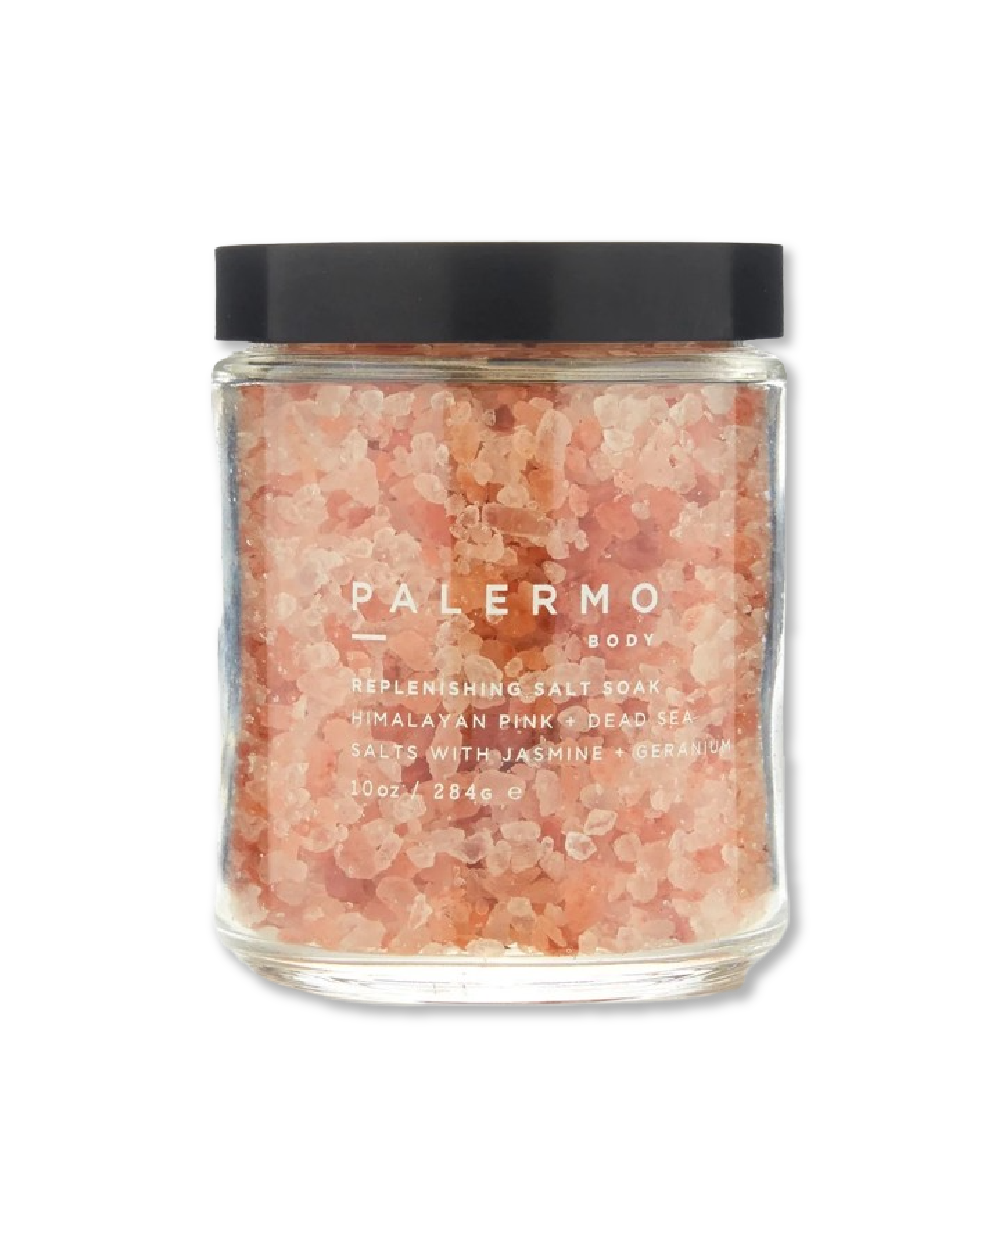 Replenishing Salt Soak x Palermo